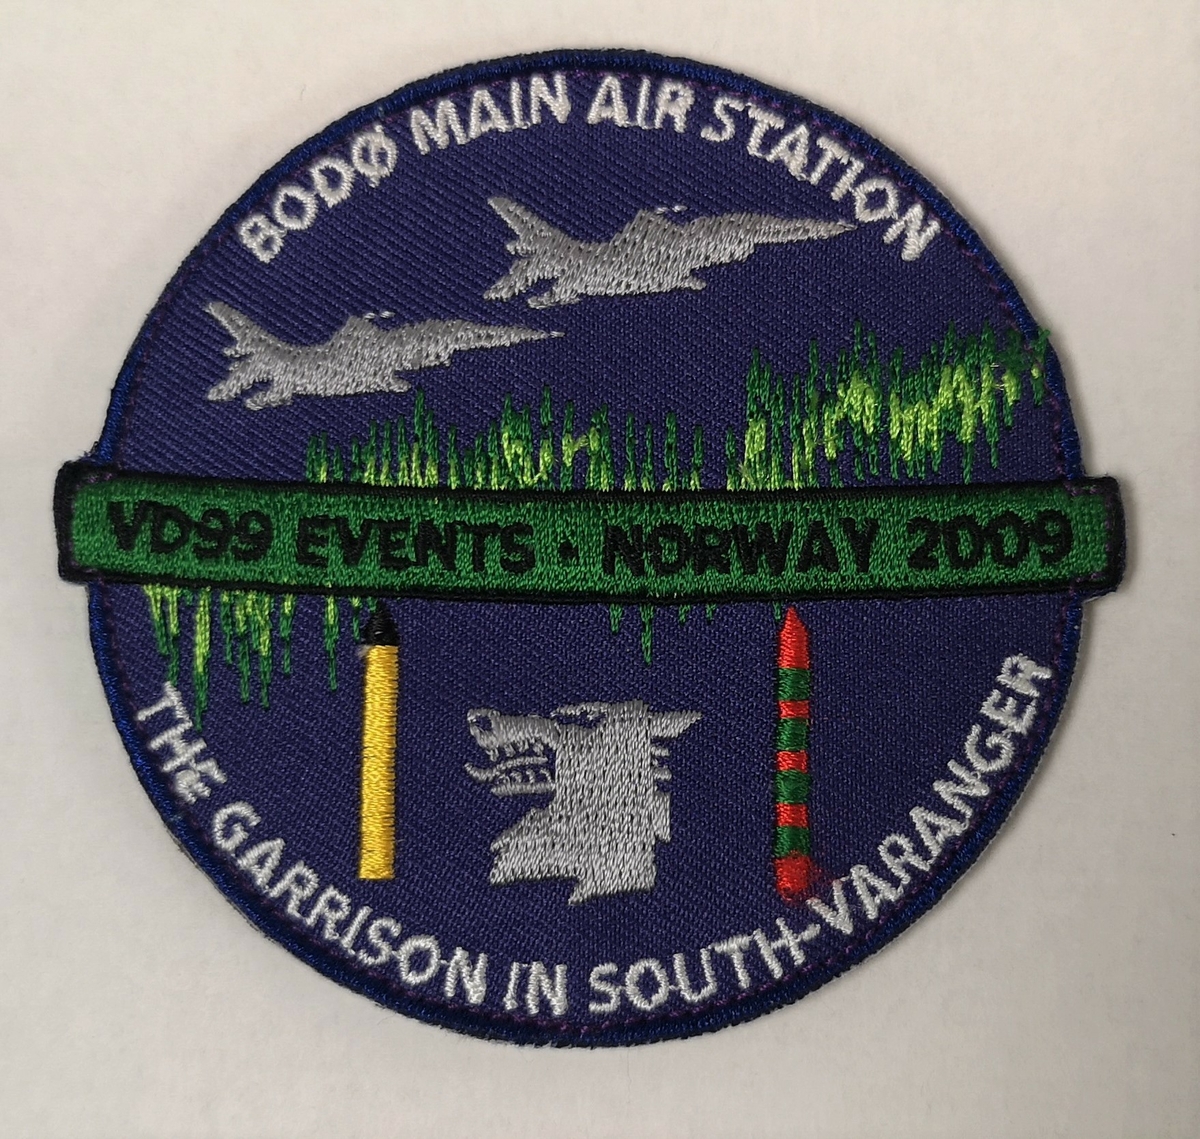 To F-16 og emblem til GSV på blå bakgrunn med nordlys.